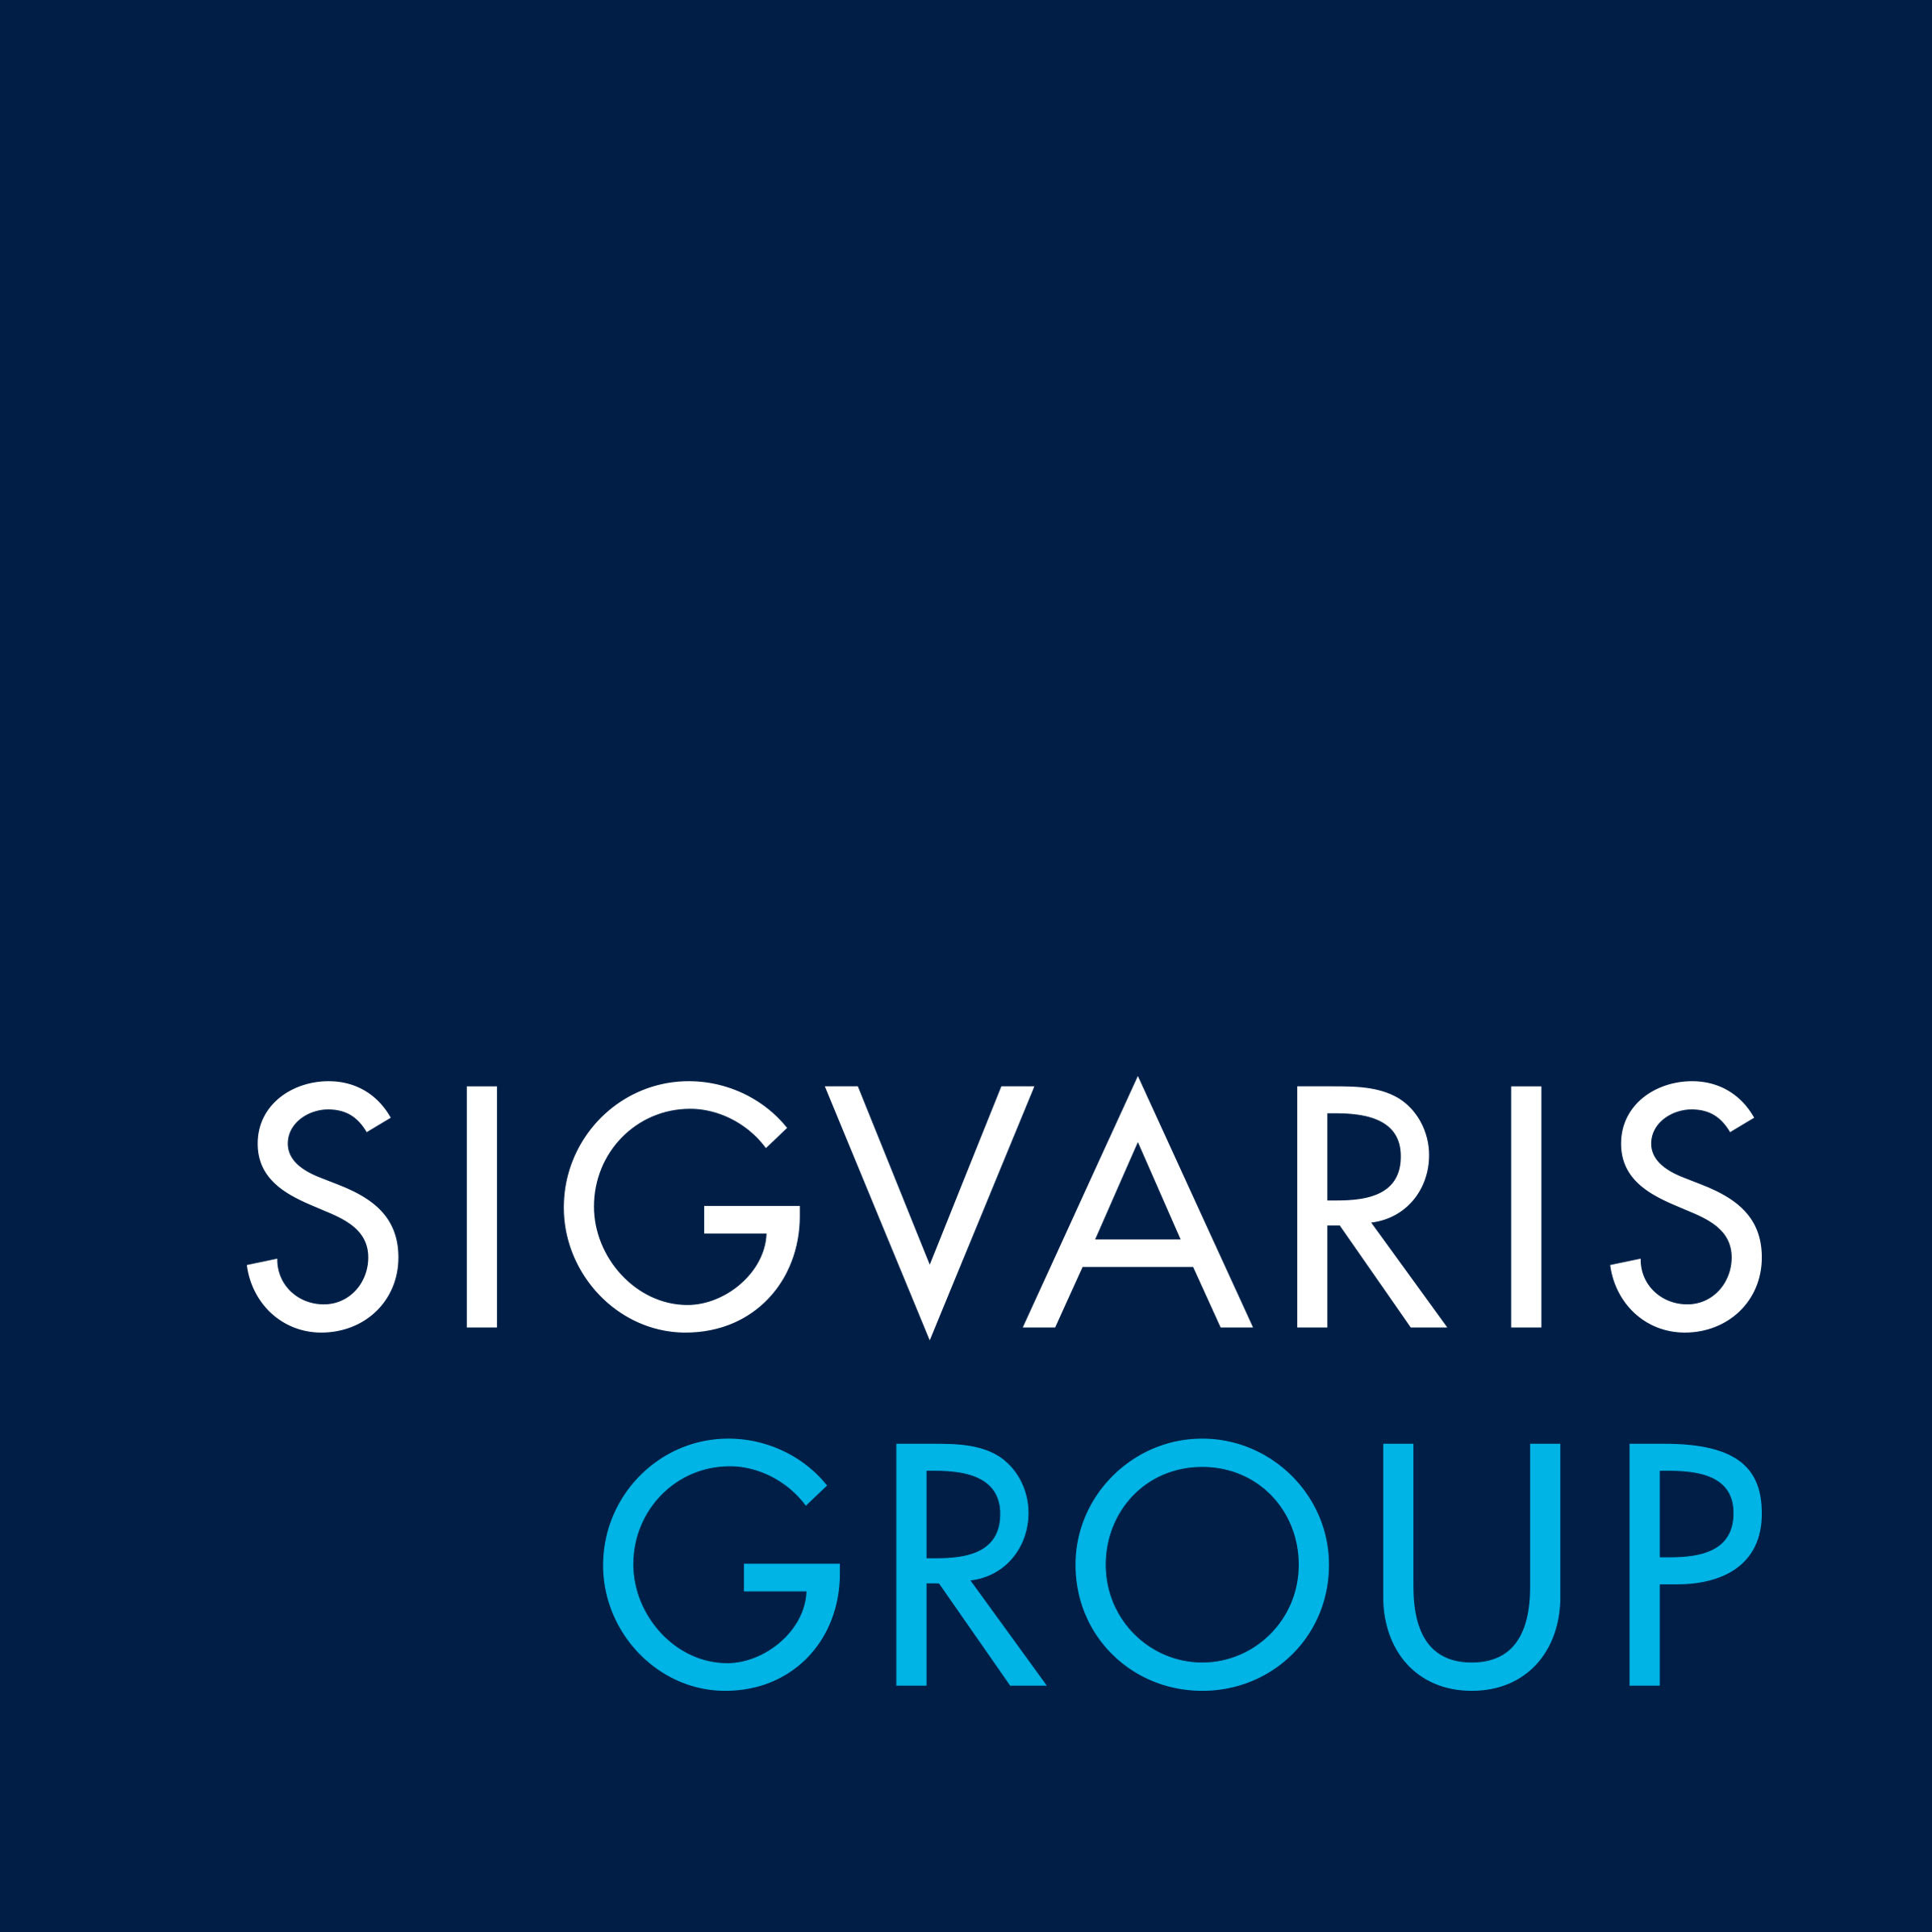 About Sigvaris